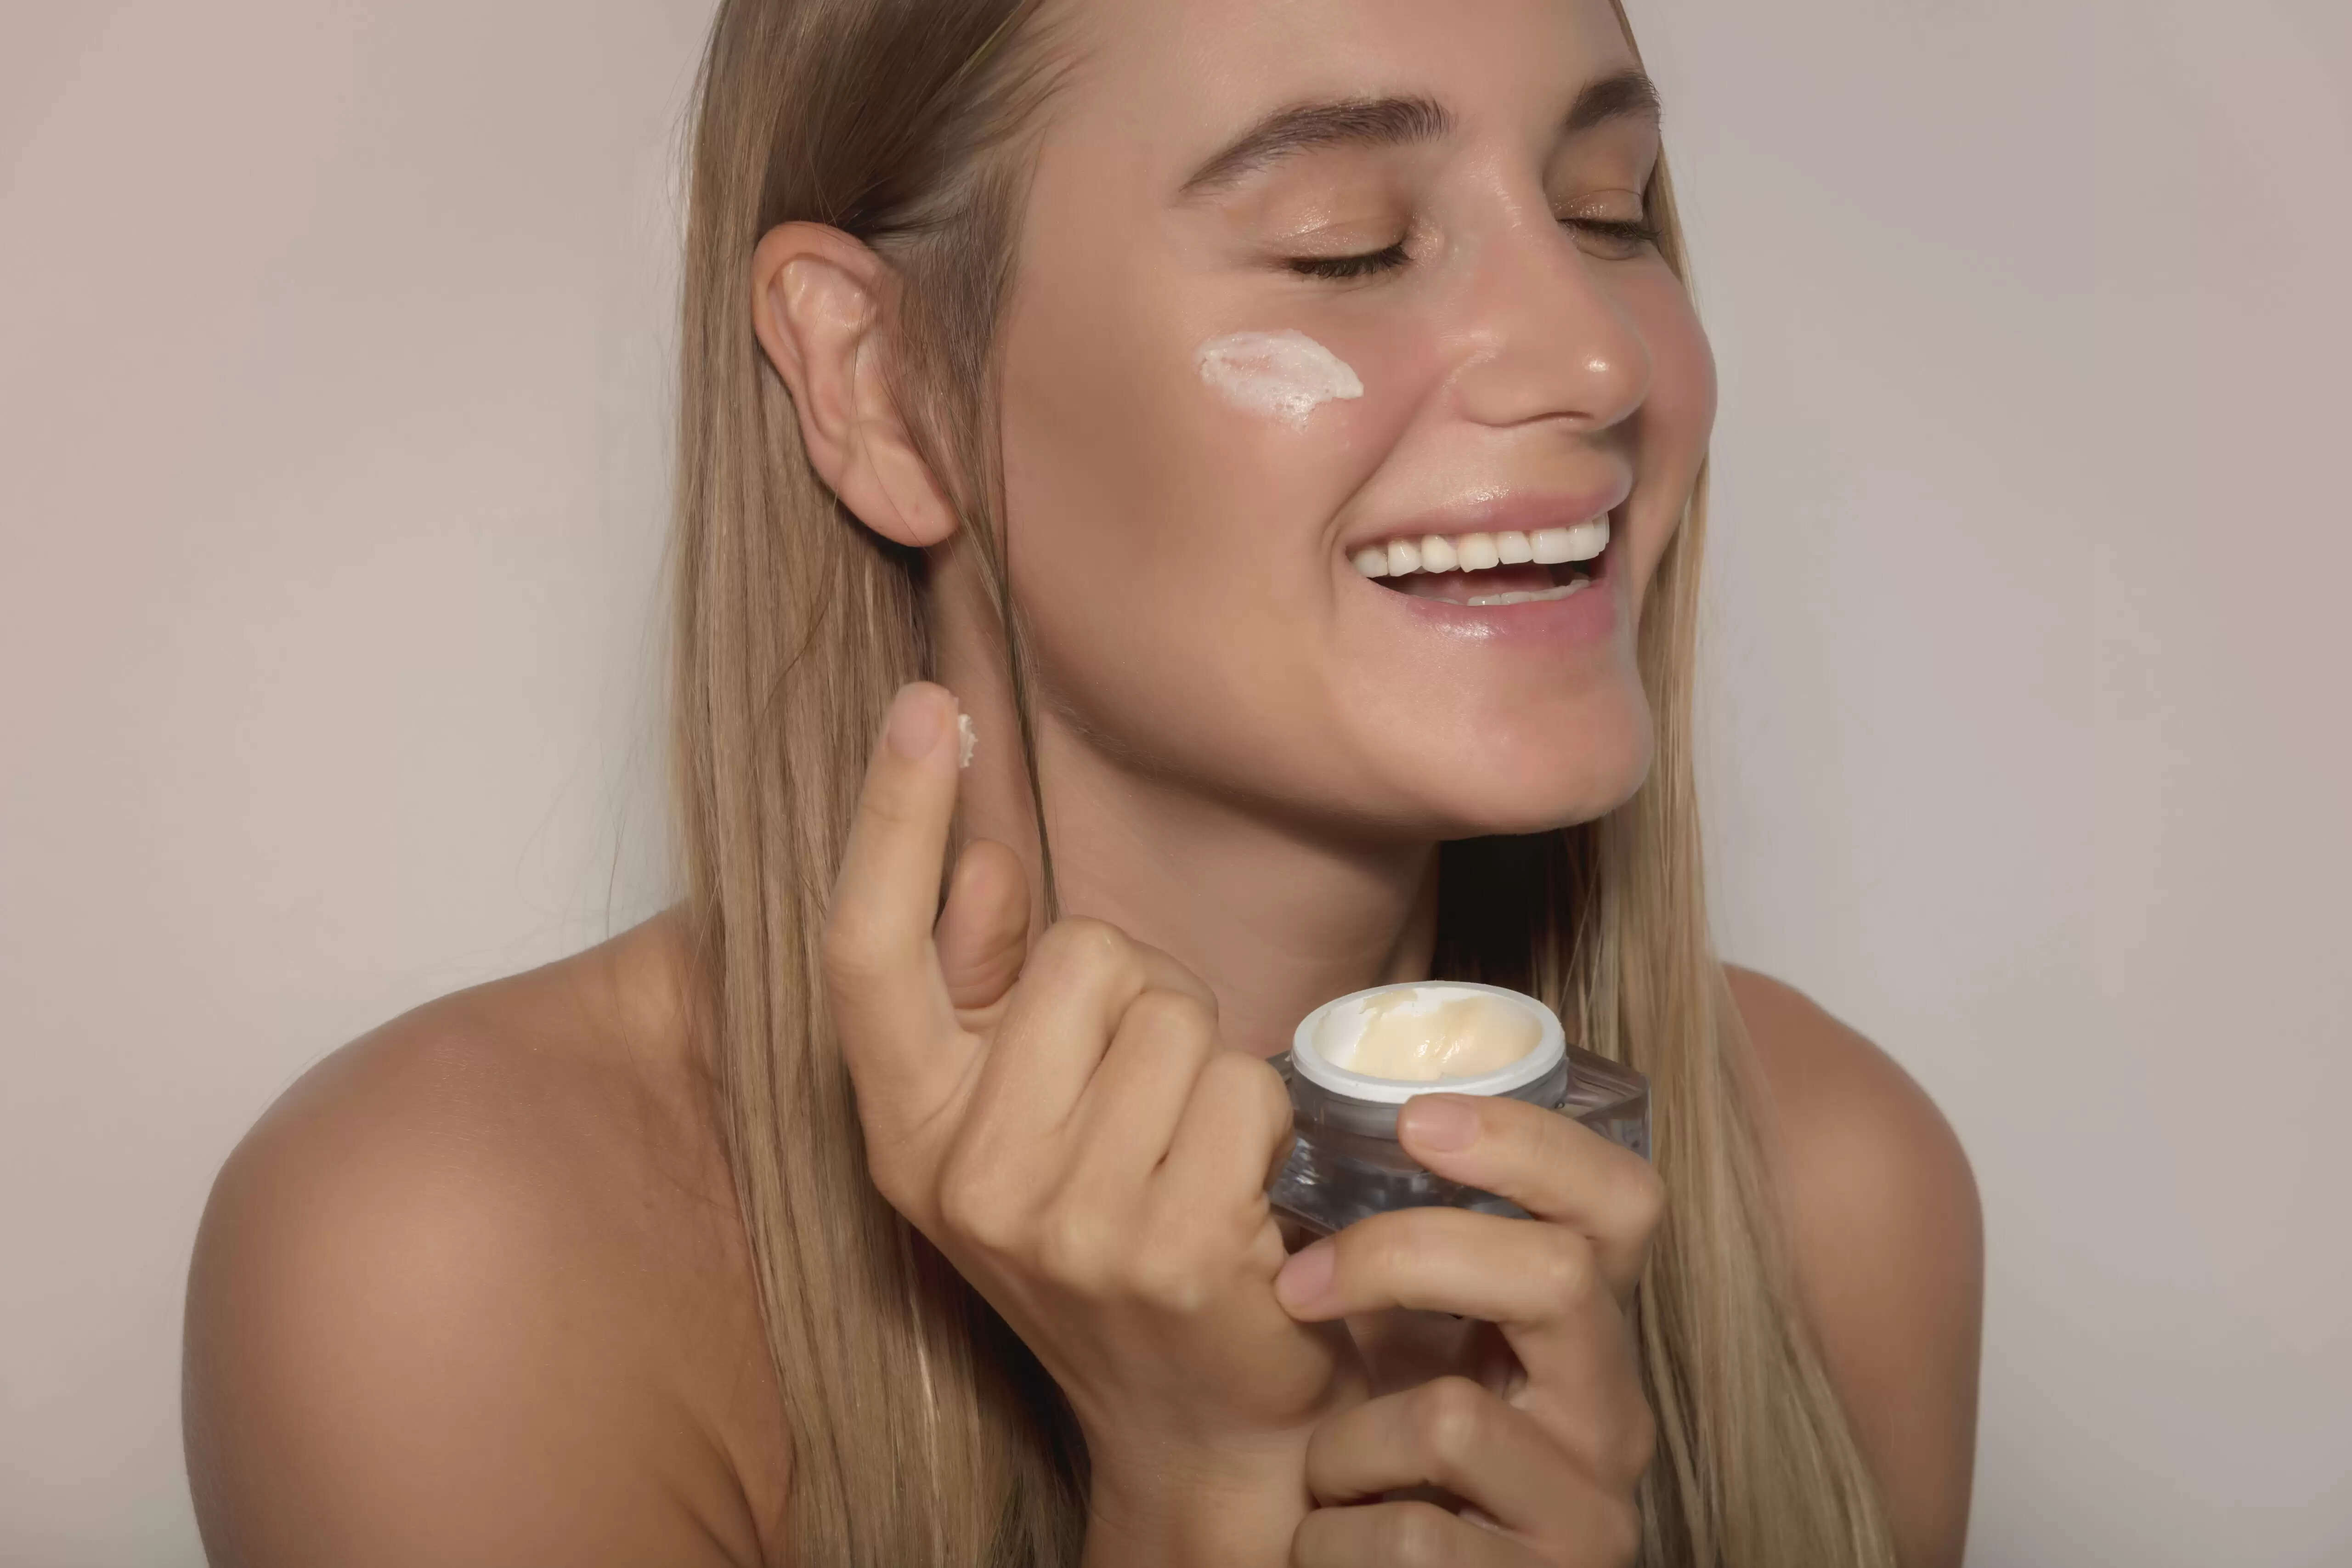 Creams that lighten skin tone can be harmful